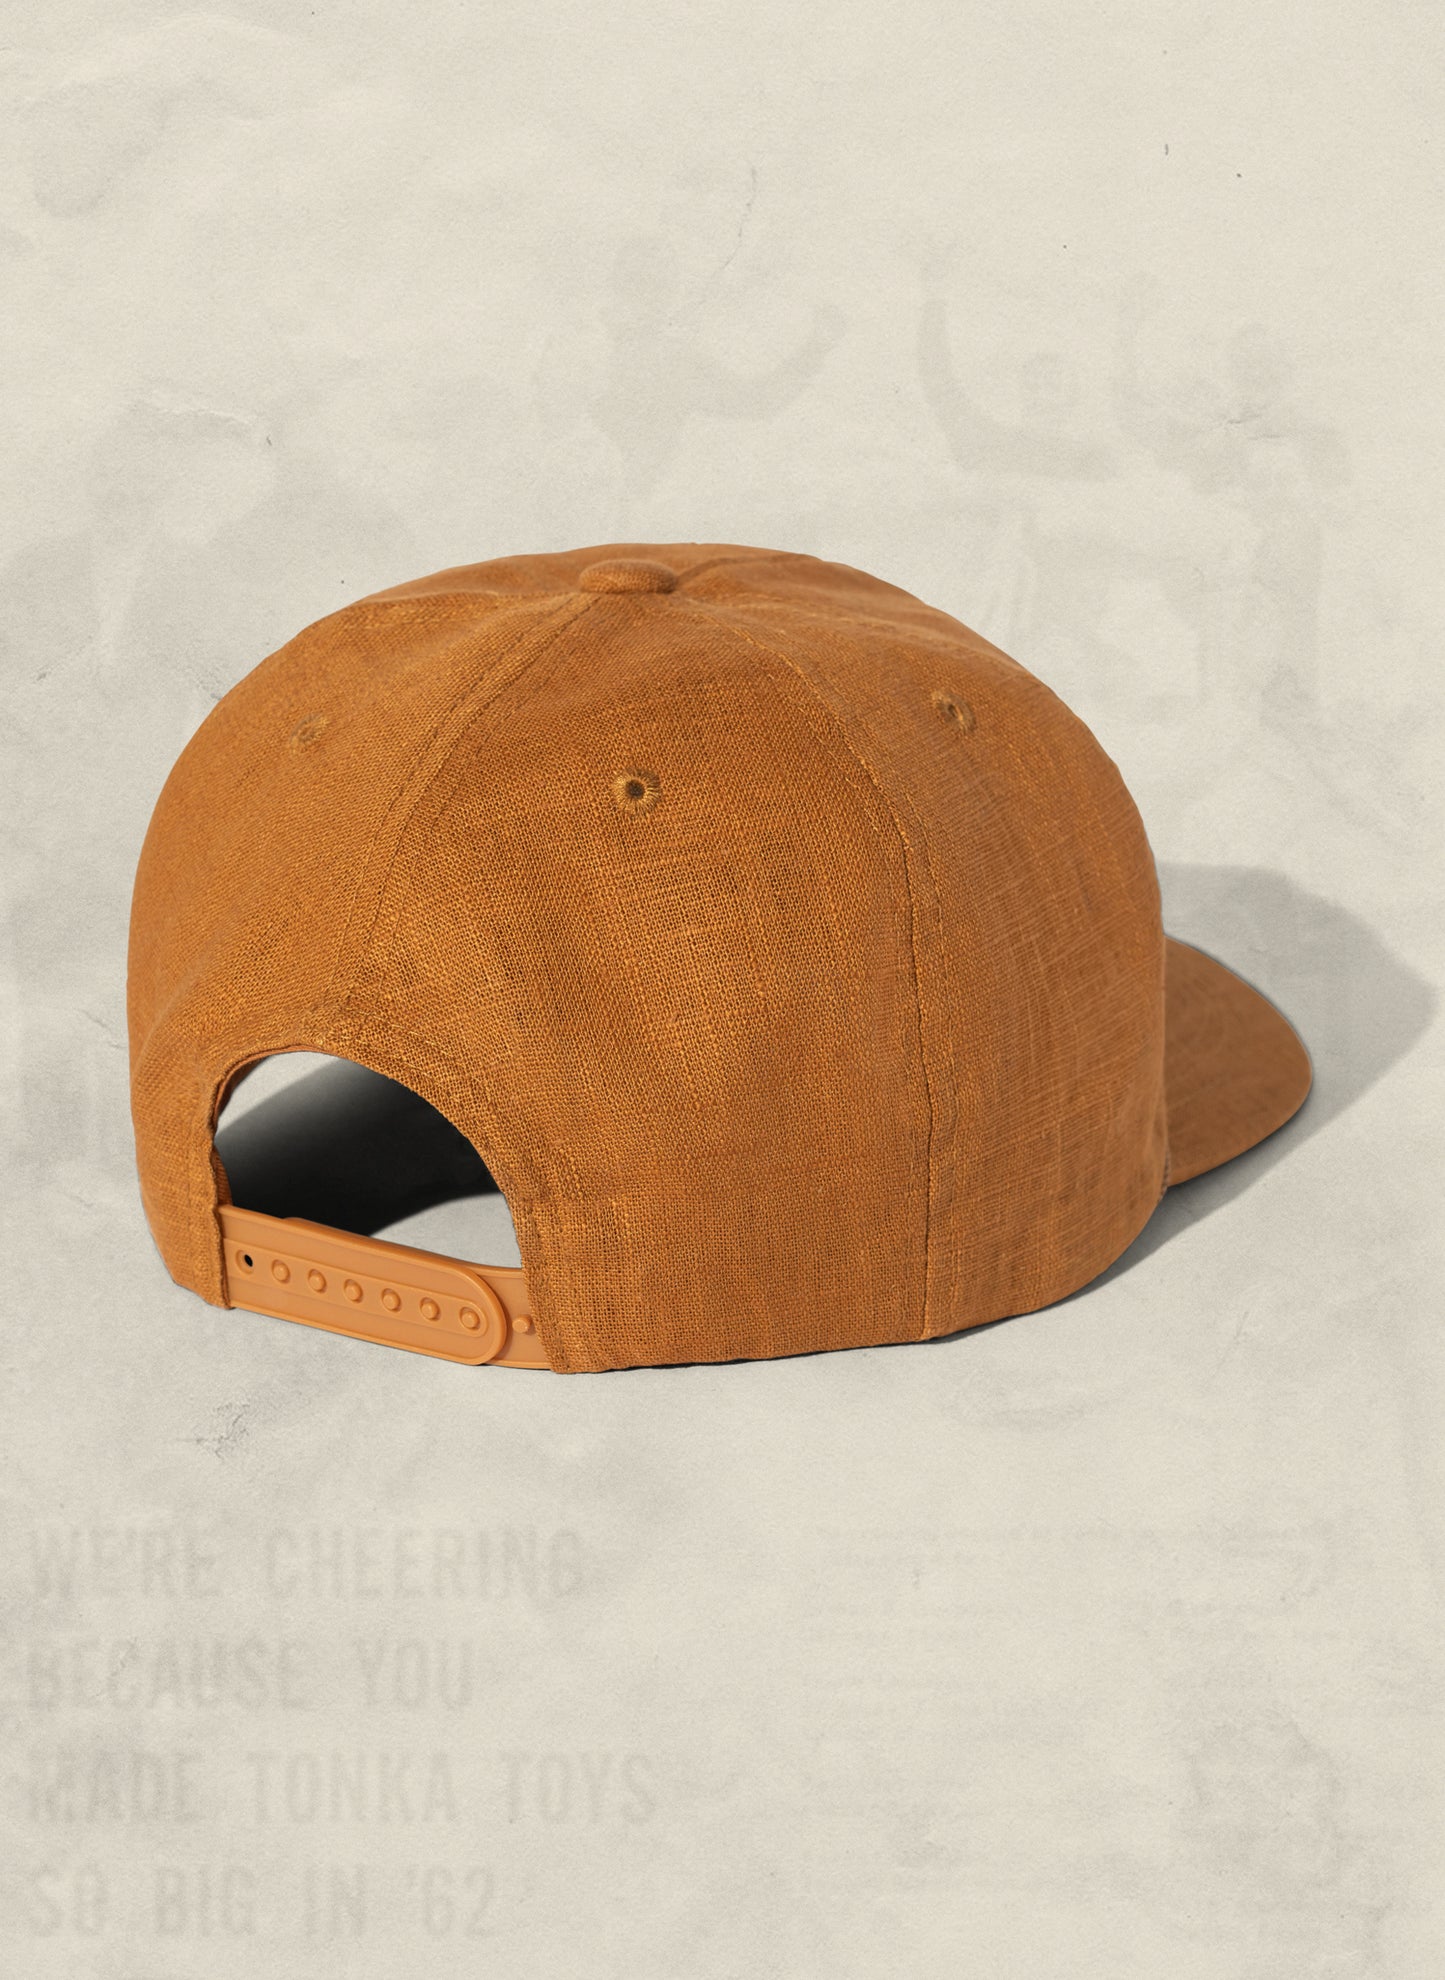 Hemp Organic Cotton Blend Unstructured Rope Trucker Snapback Hat, Best Blank Hats, Best Hemp Hats, Weld Mfg